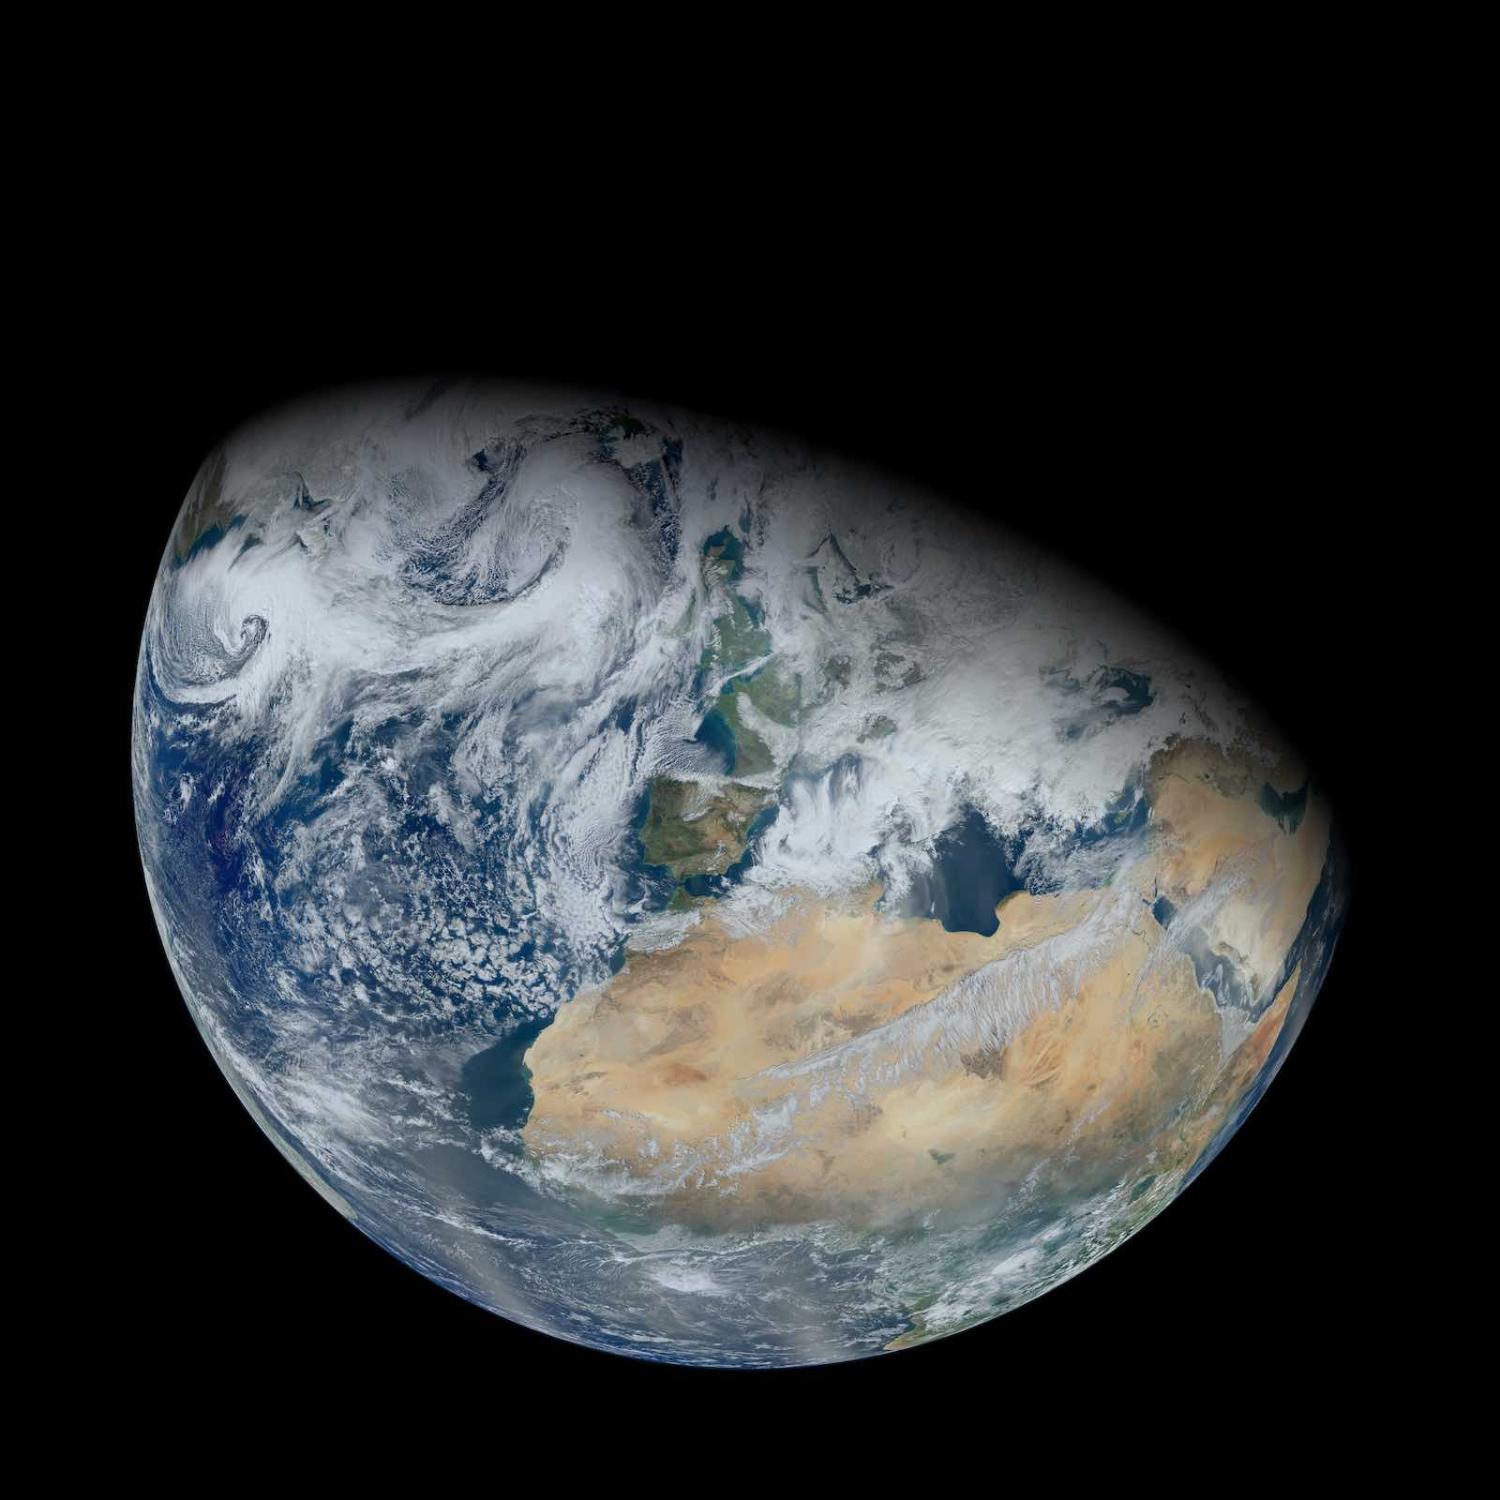 Casting shade on “negative globalism” (Photo: NASA)